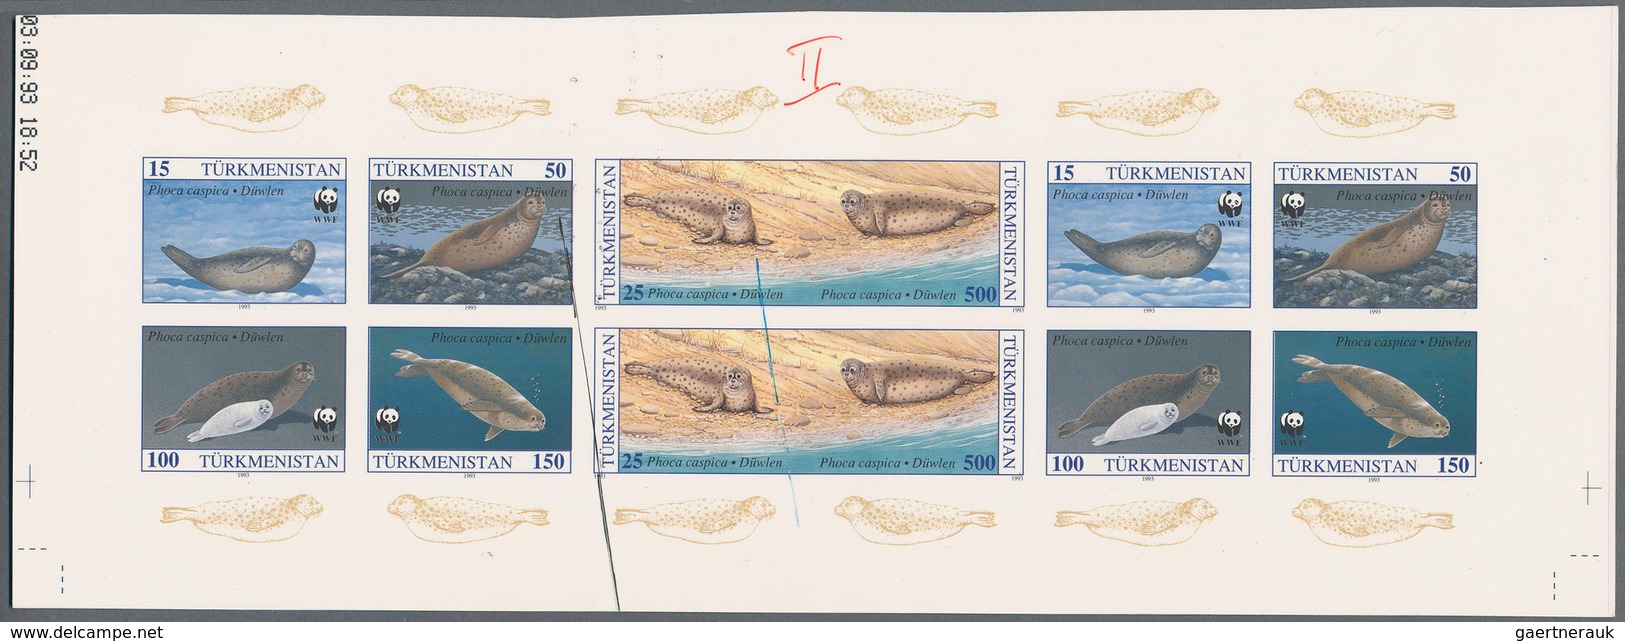 11085 Thematik: Tiere-Meerestiere / animals-sea animals: 1993, TURKMENISTAN: Caspic seal 'Phoca caspica' s